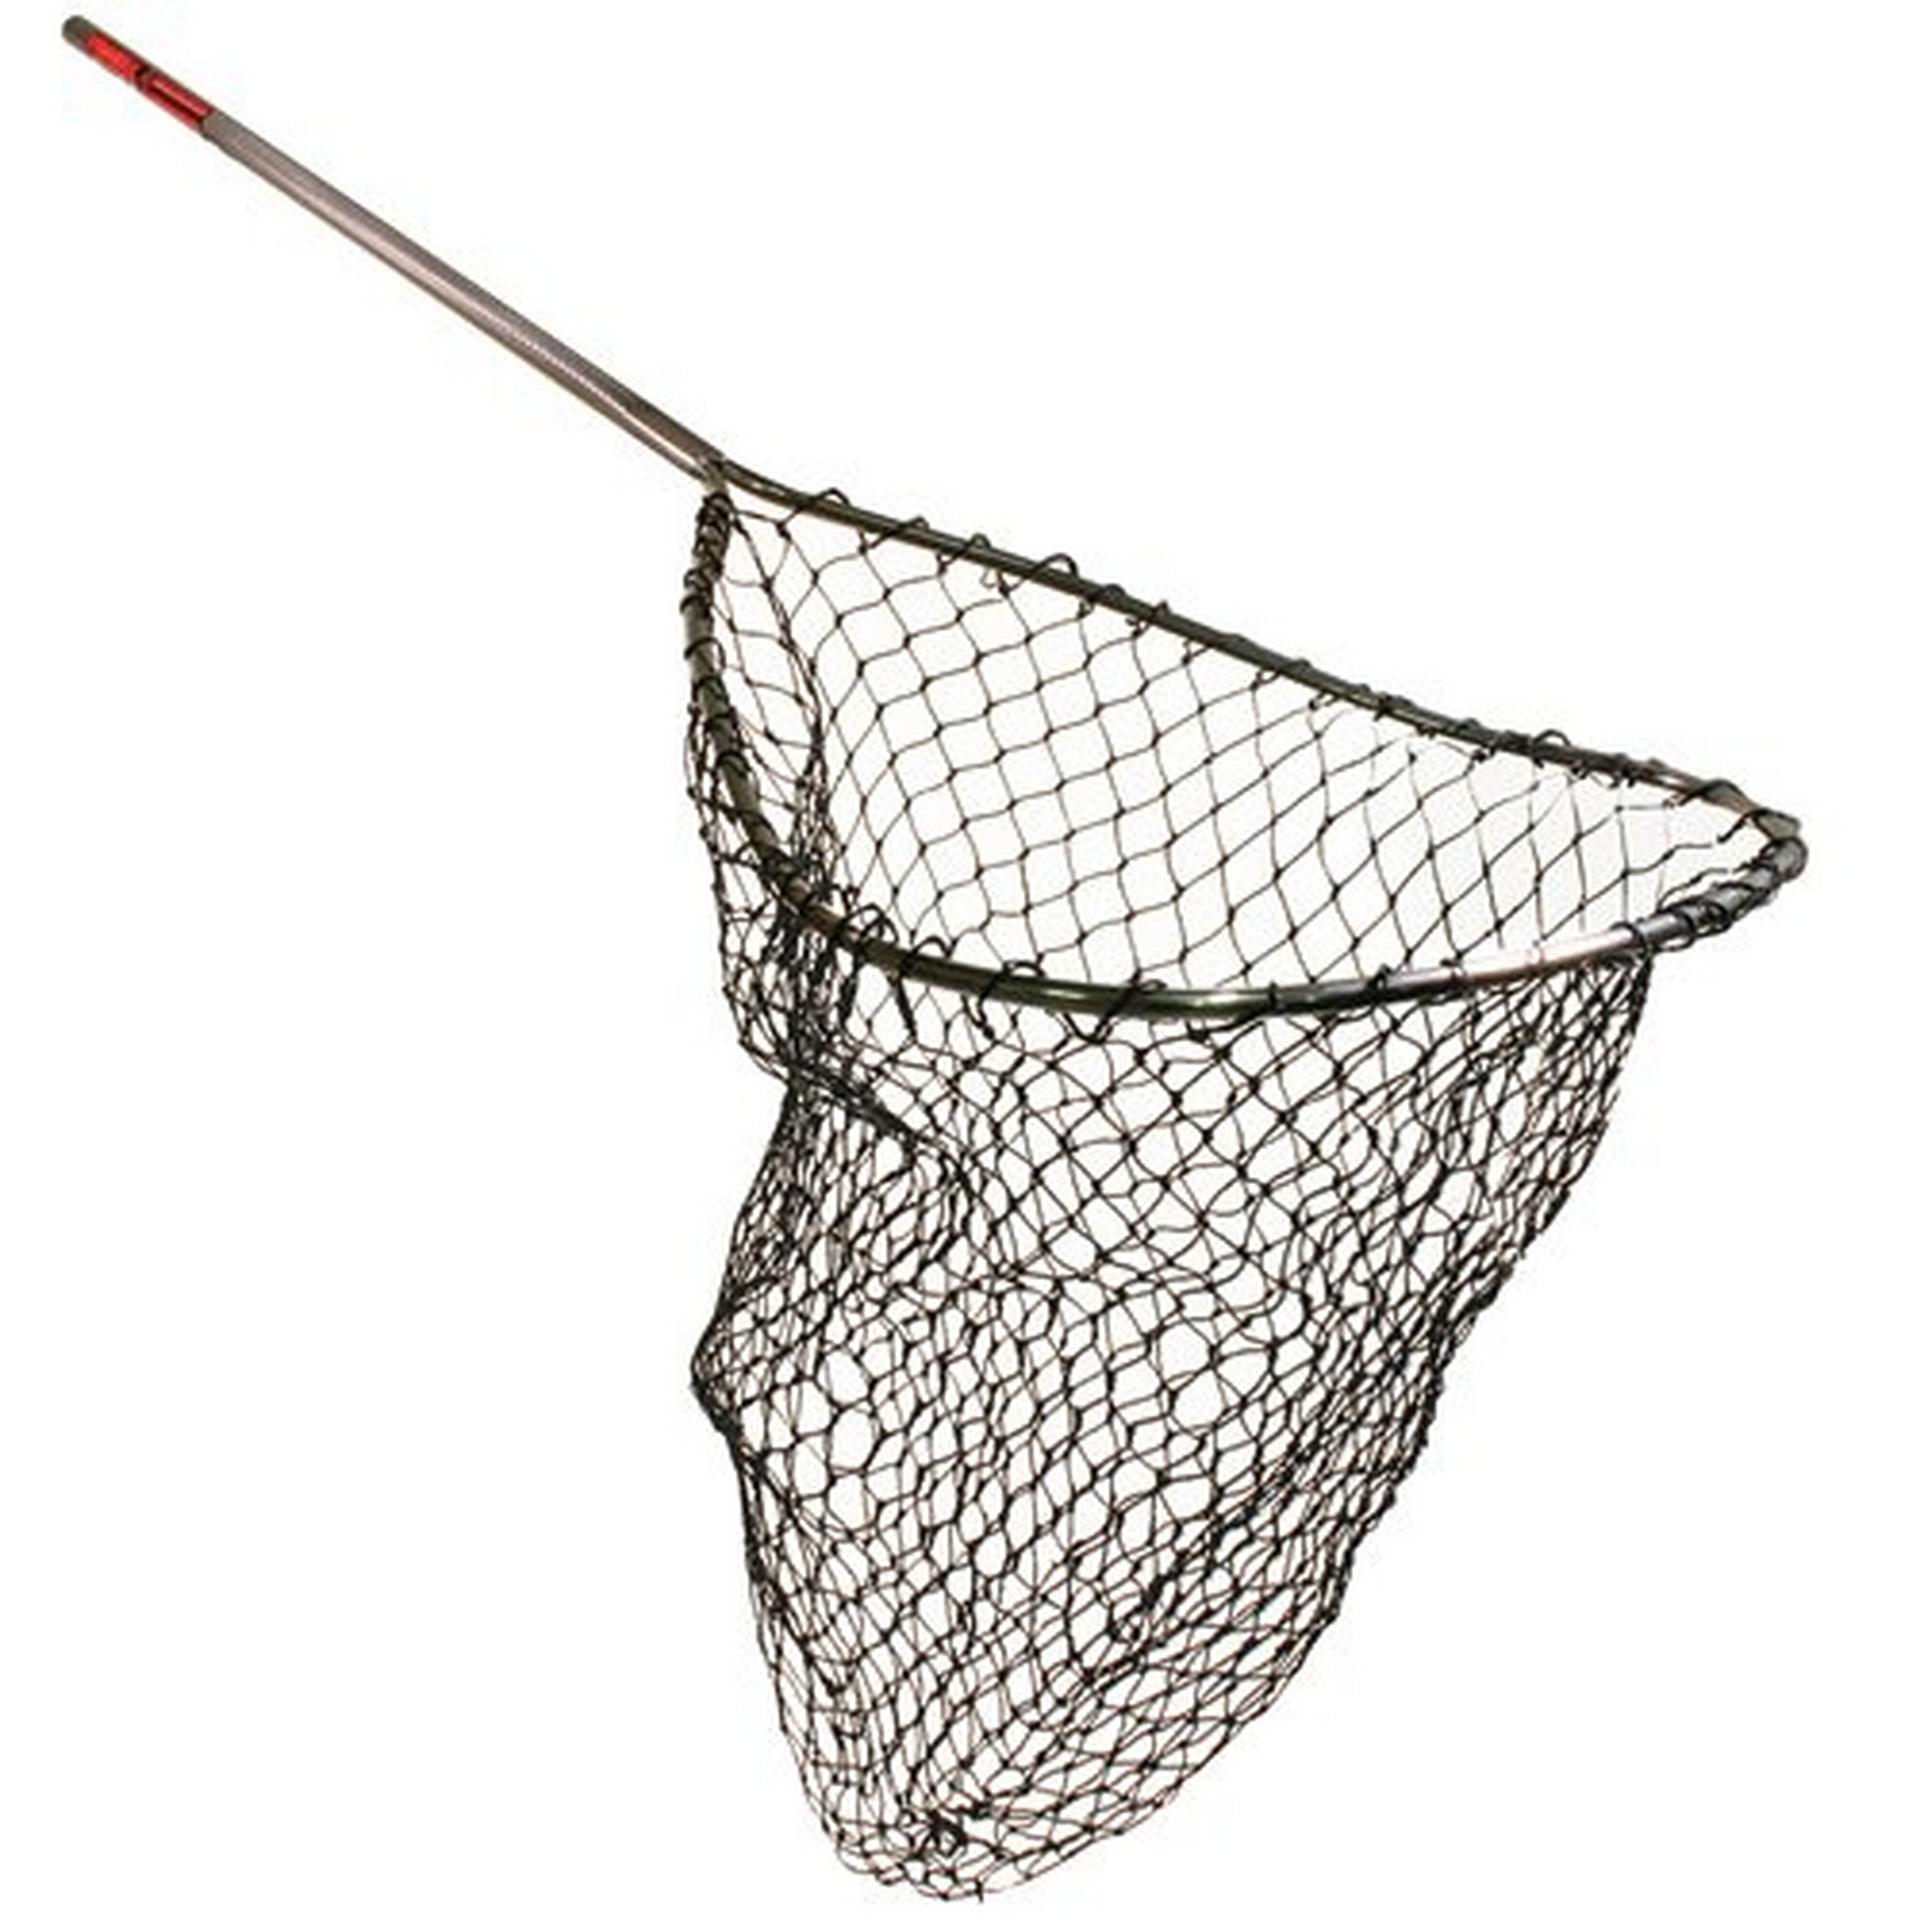 Frabill® Fishing Gear  Nets, Bait Management, Ice Fishing – Frabill Fishing  – Page 2